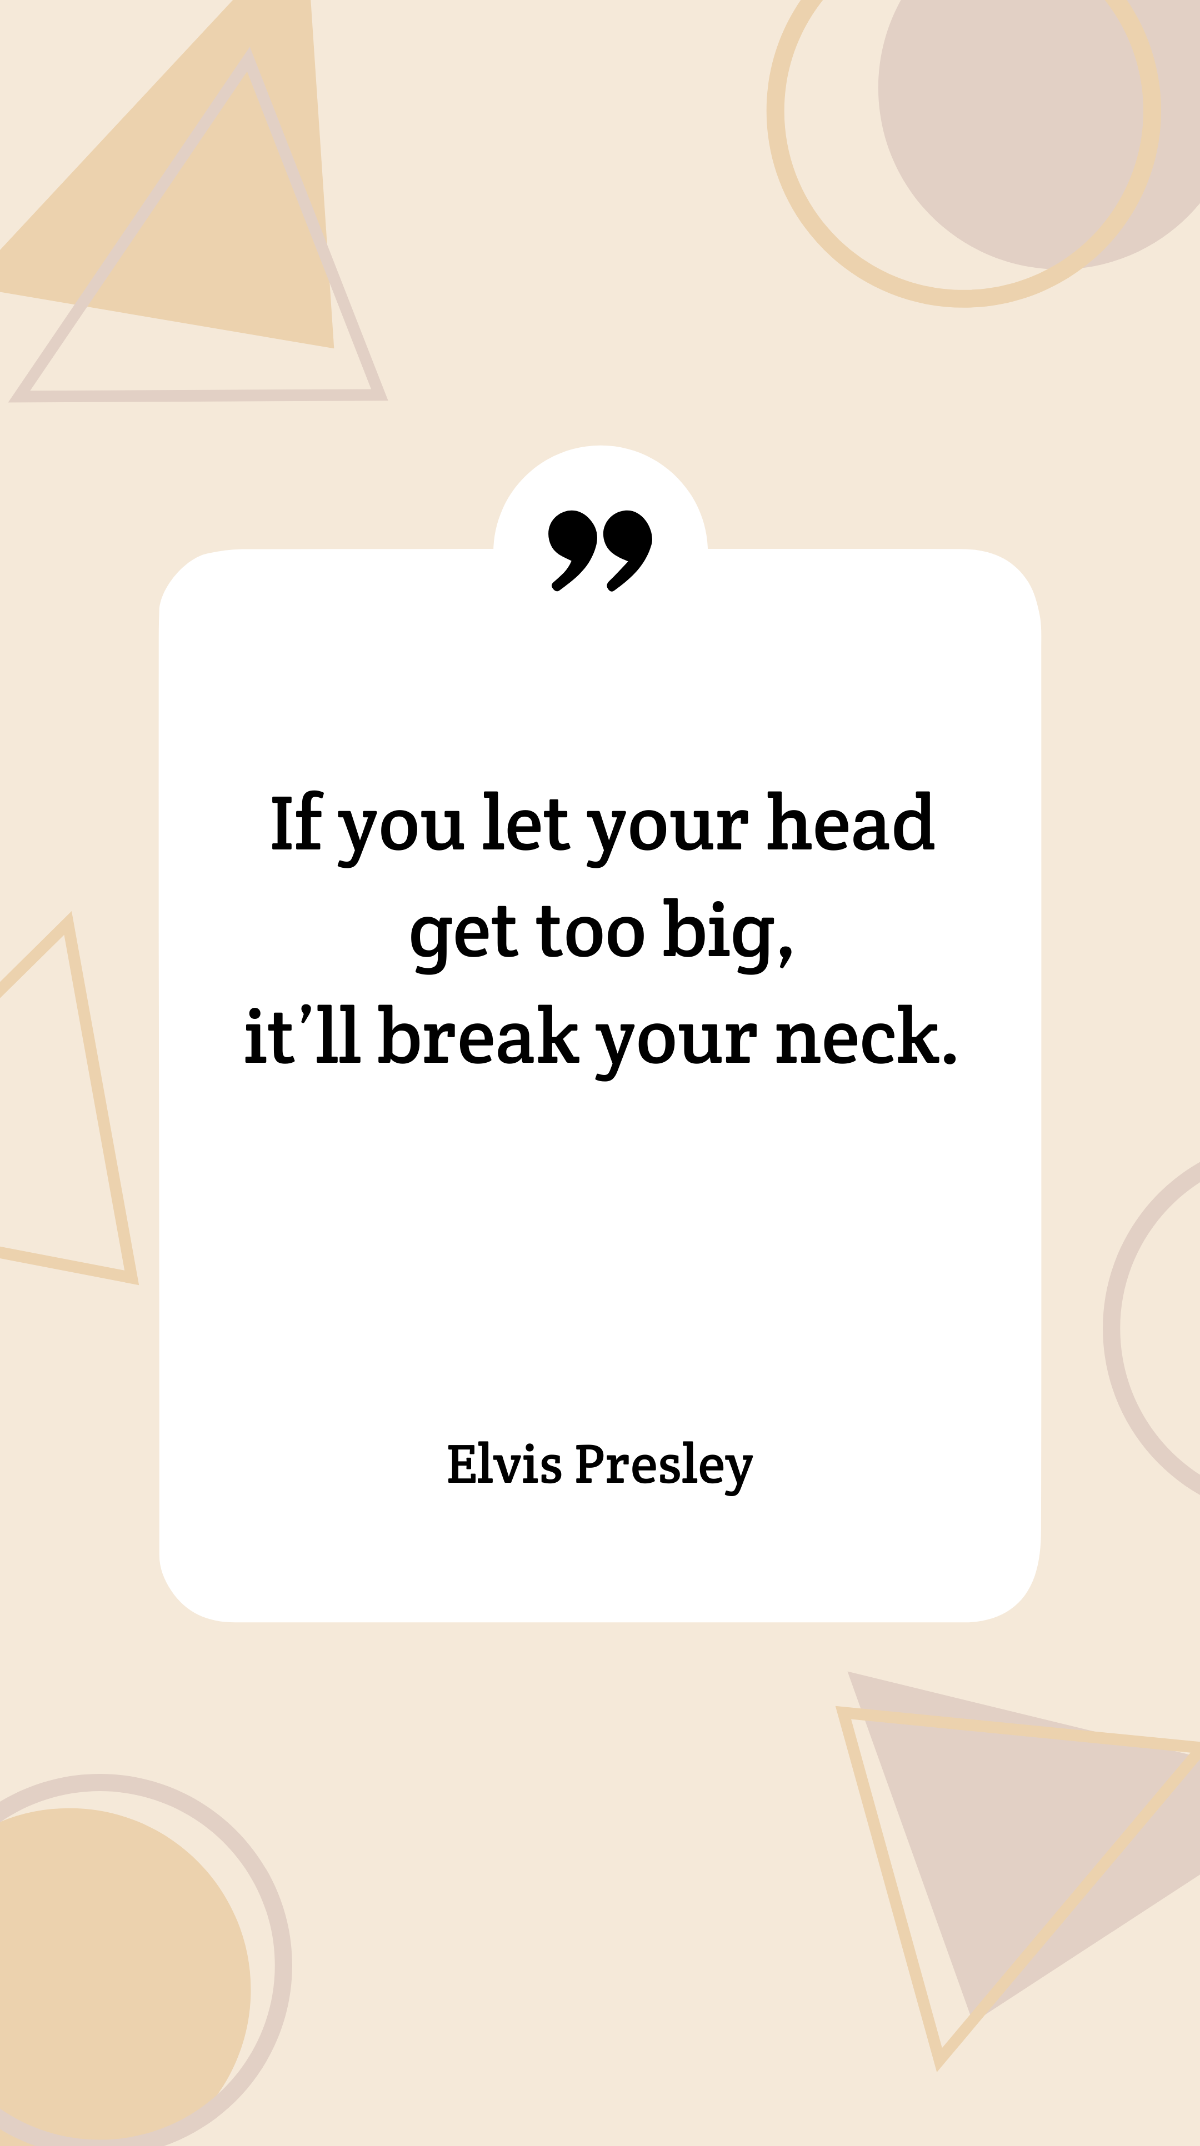 Elvis Presley - If you let your head get too big, it’ll break your neck. Template